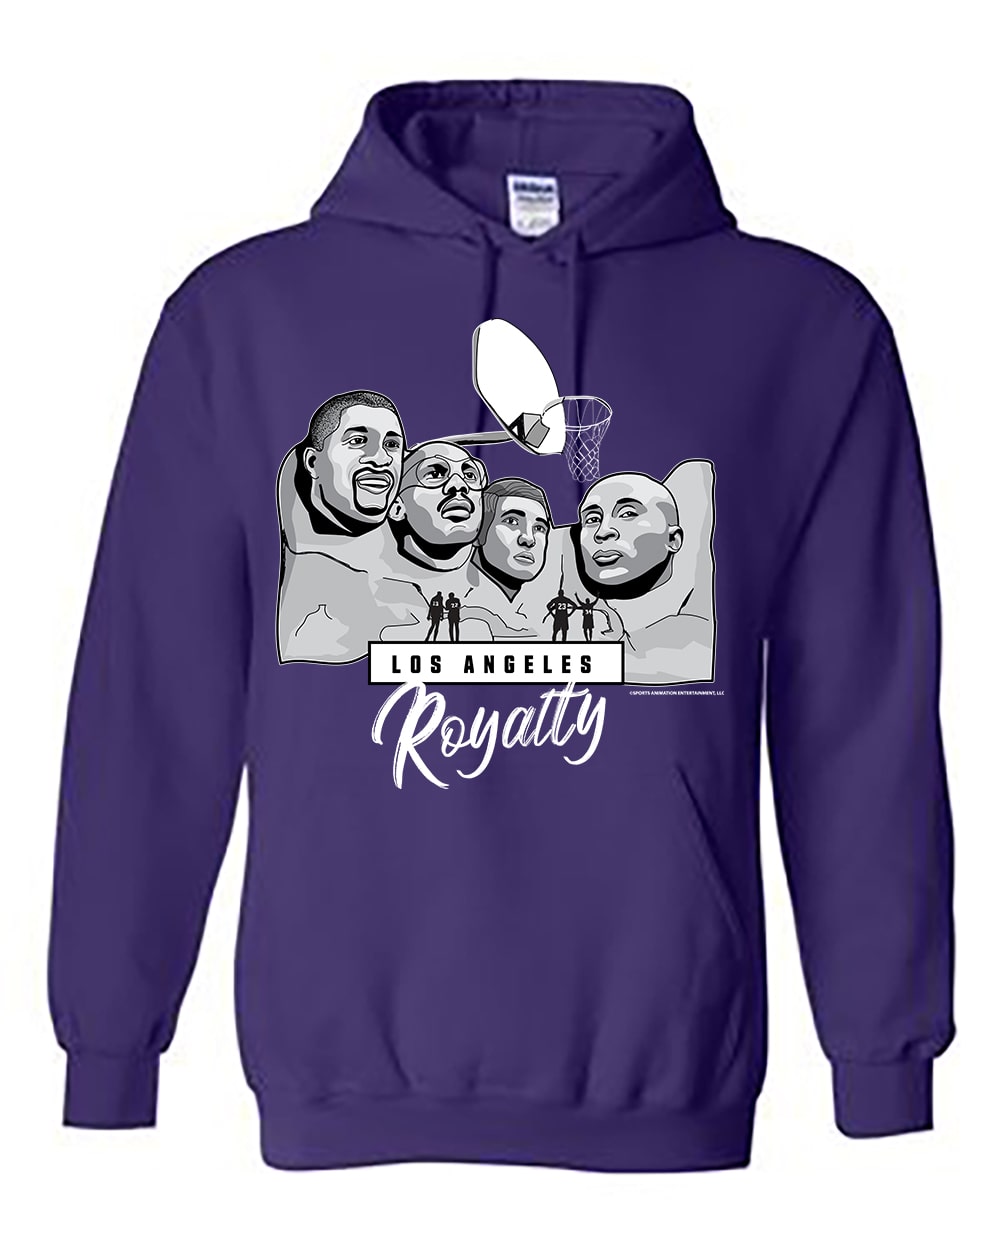 Basketball Los Angeles Royalty (Purple Heavy Duty Hoodie) Mount Rushmore